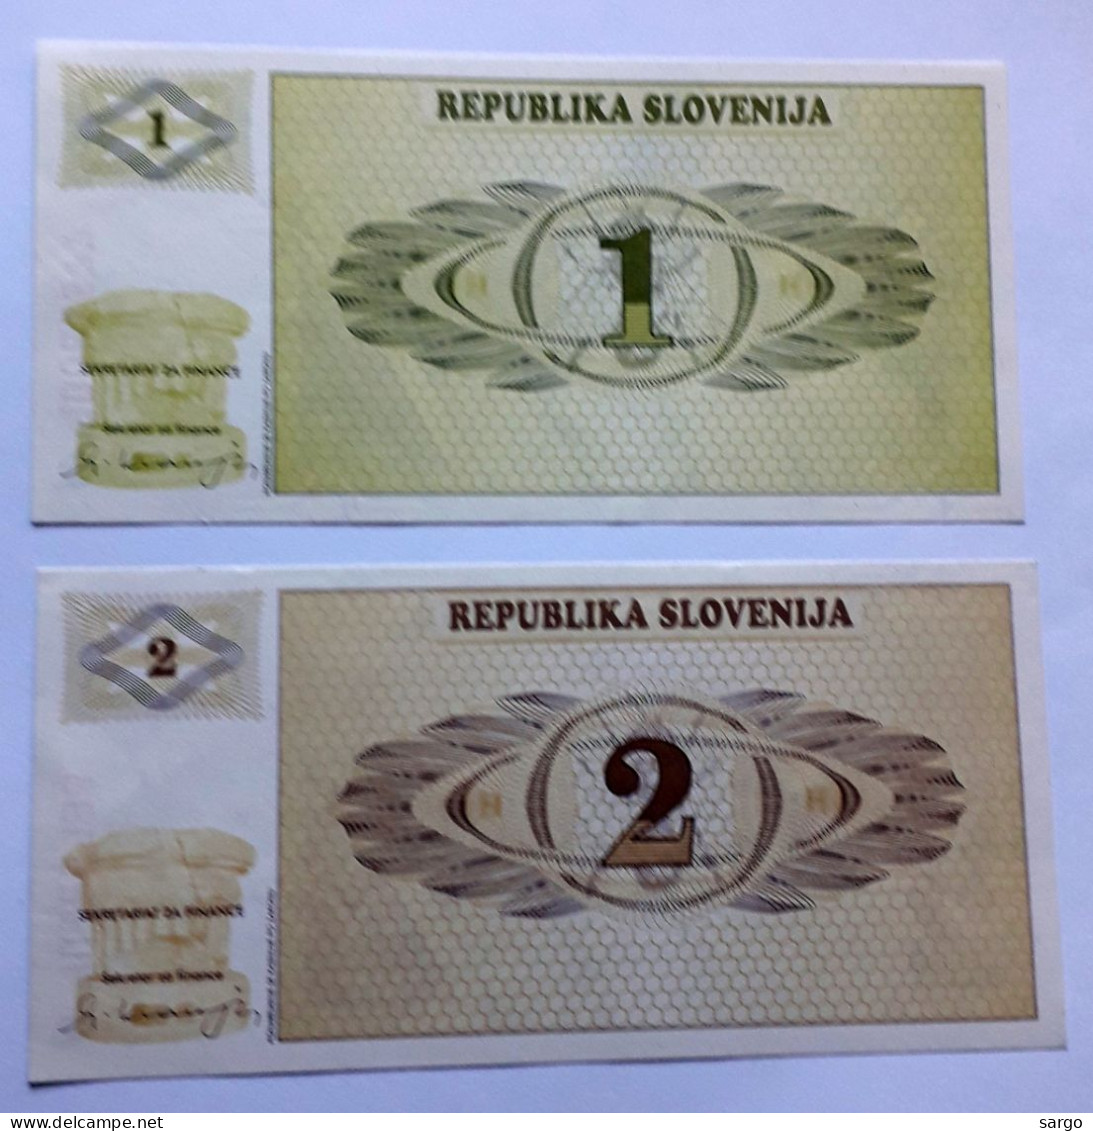 SLOVENIA  - 1,2 TOLARJEV  - P1 , P 2 (1990) -- UNC - BANKNOTES - PAPER MONEY - CARTAMONETA - - Slovénie